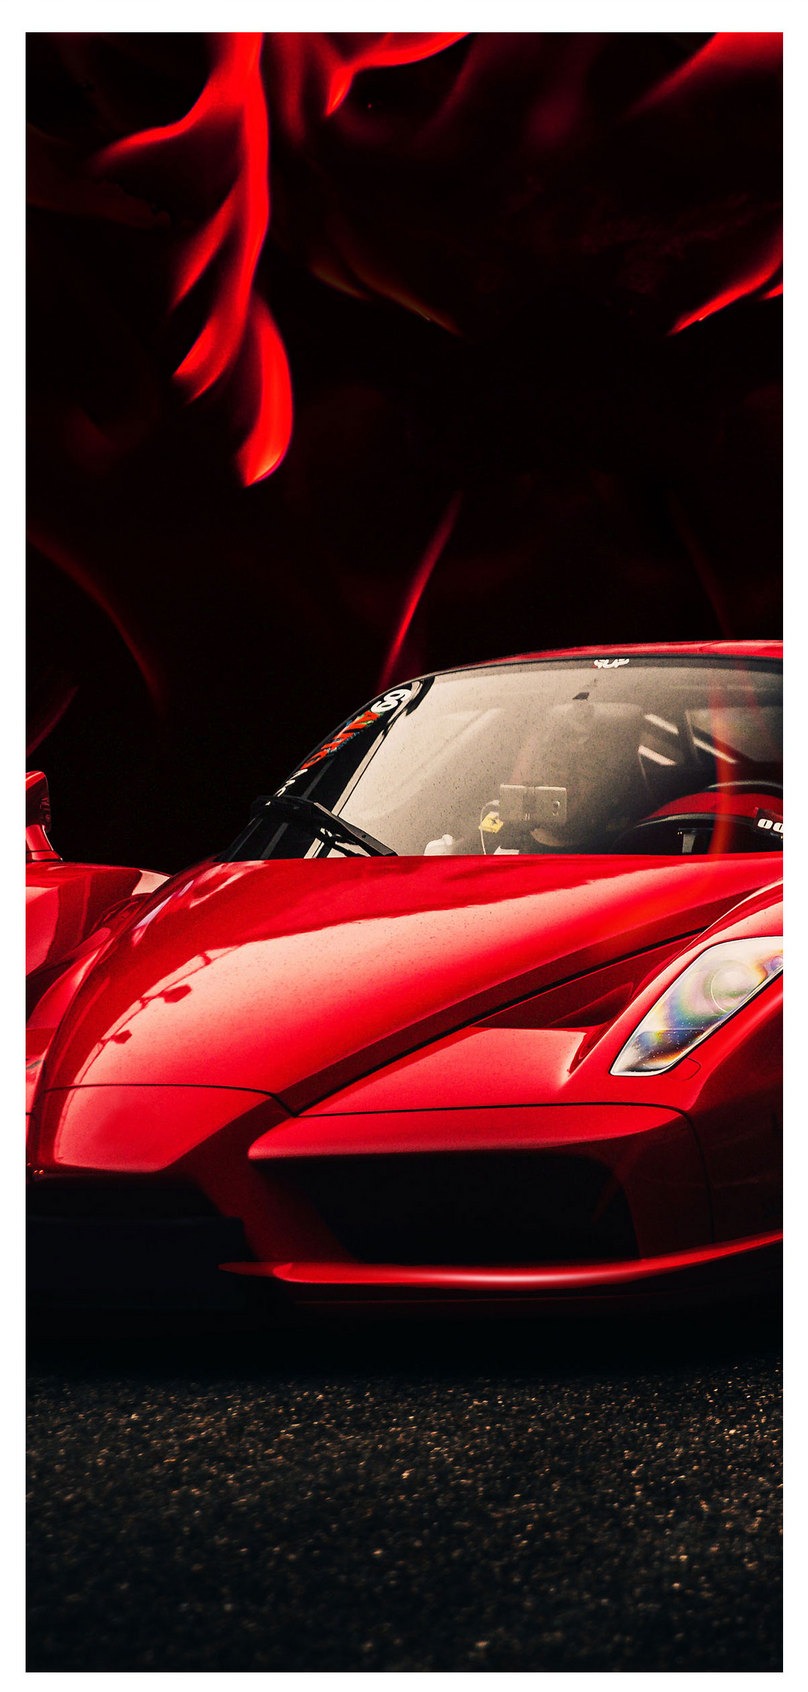 Red Car Mobile Wallpaper